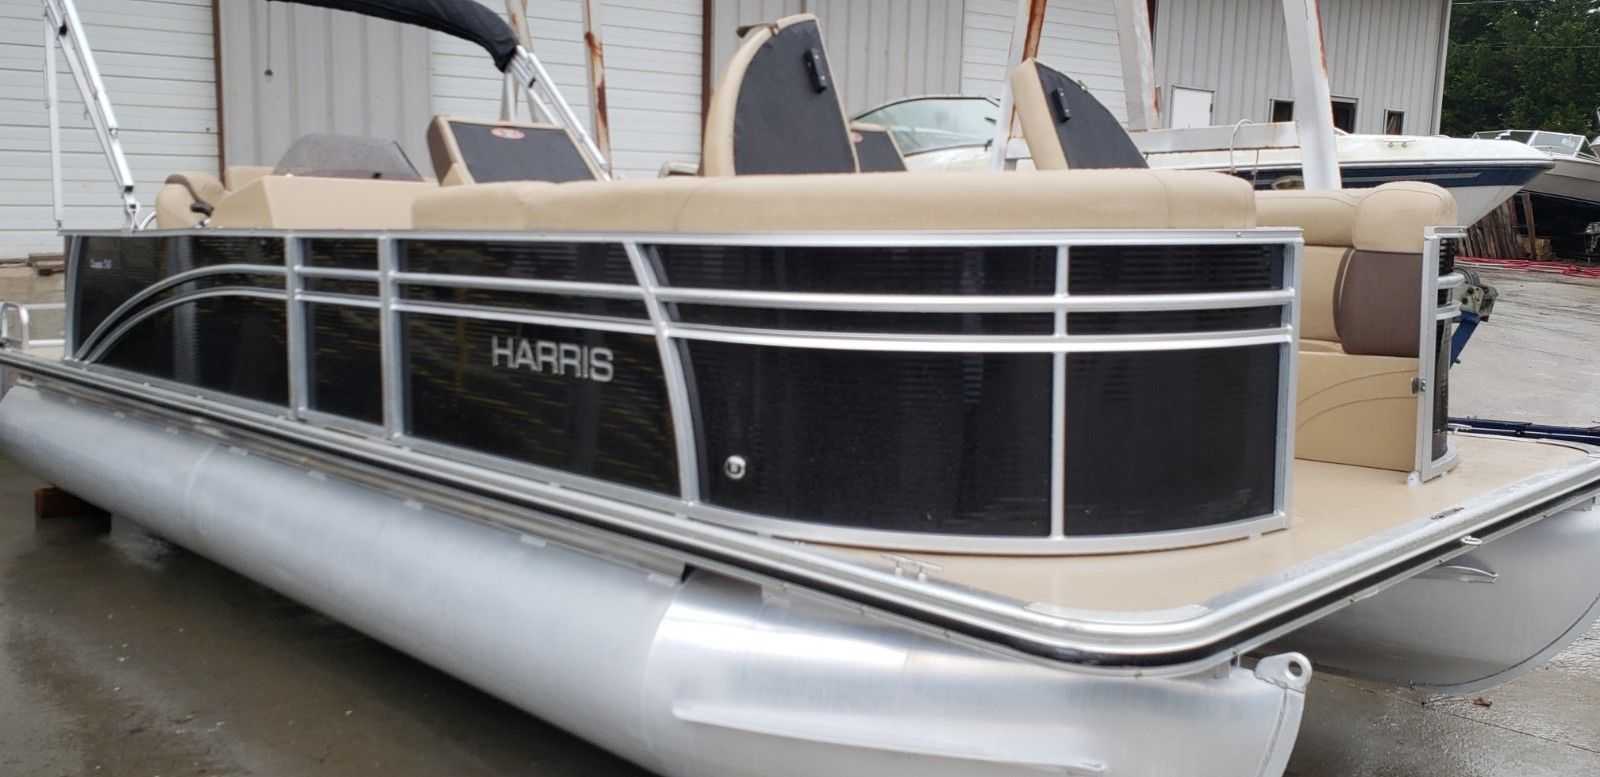 Harris Flotebote Cruiser 240